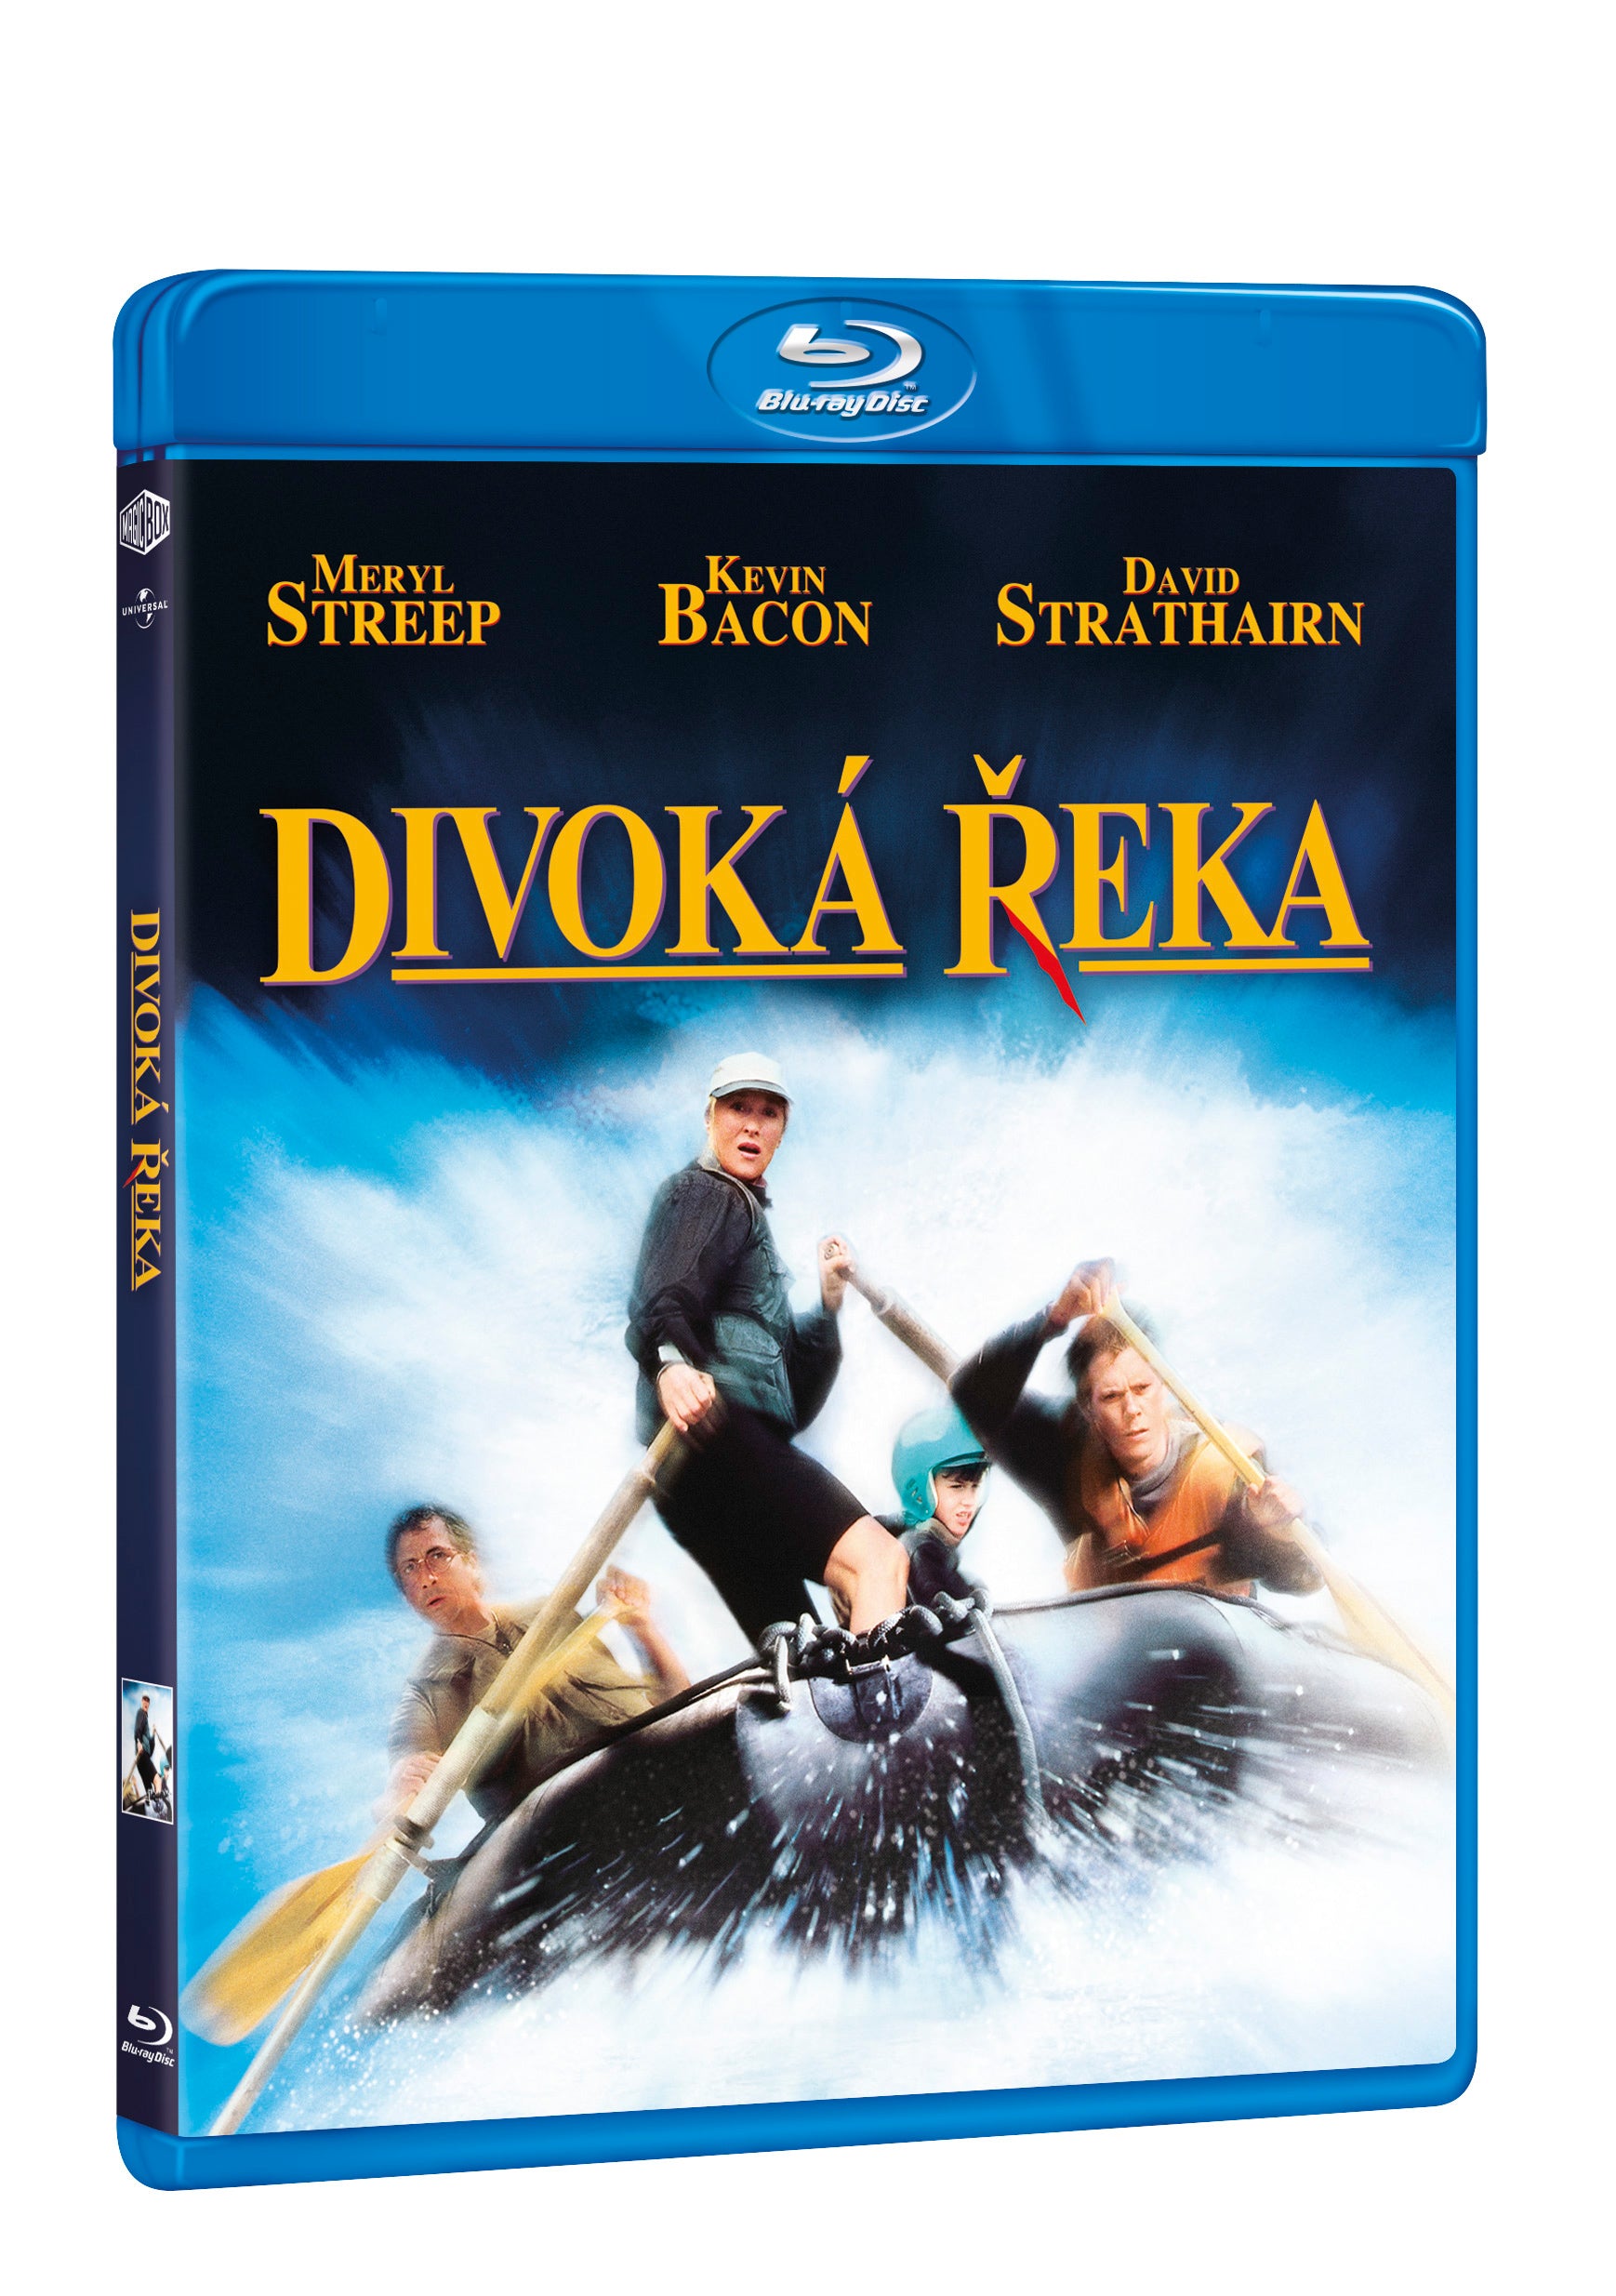 Divoka reka BD / The River Wild - Czech version